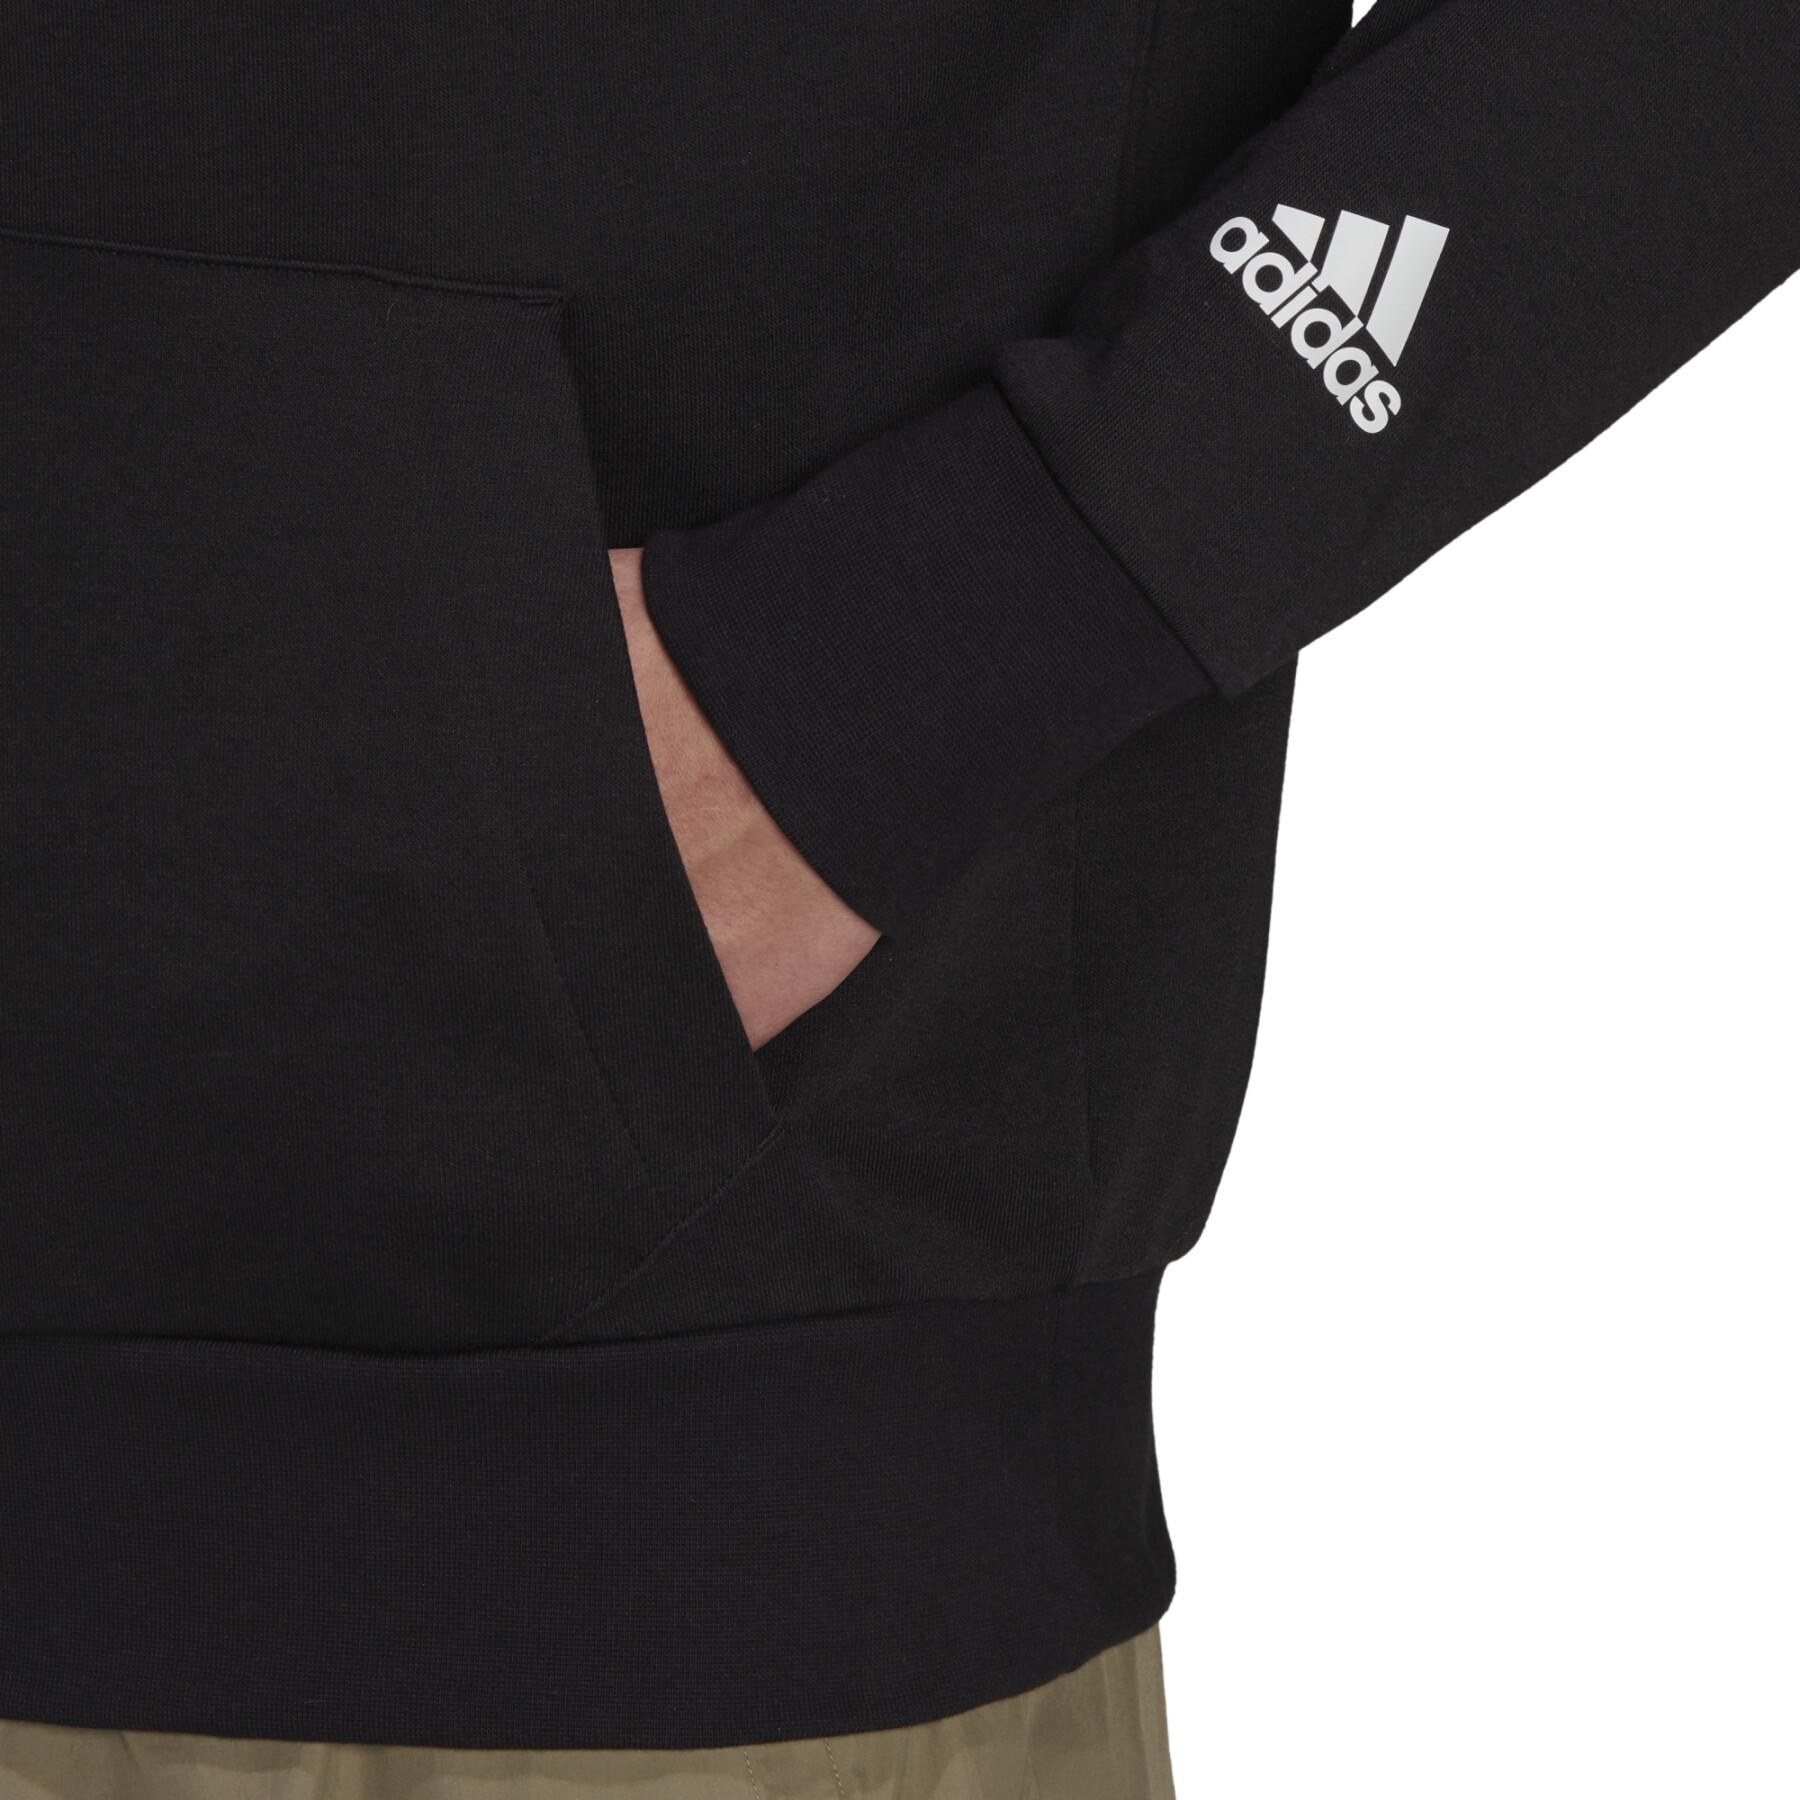 Sweatshirt à capuche adidas Essentials Logo